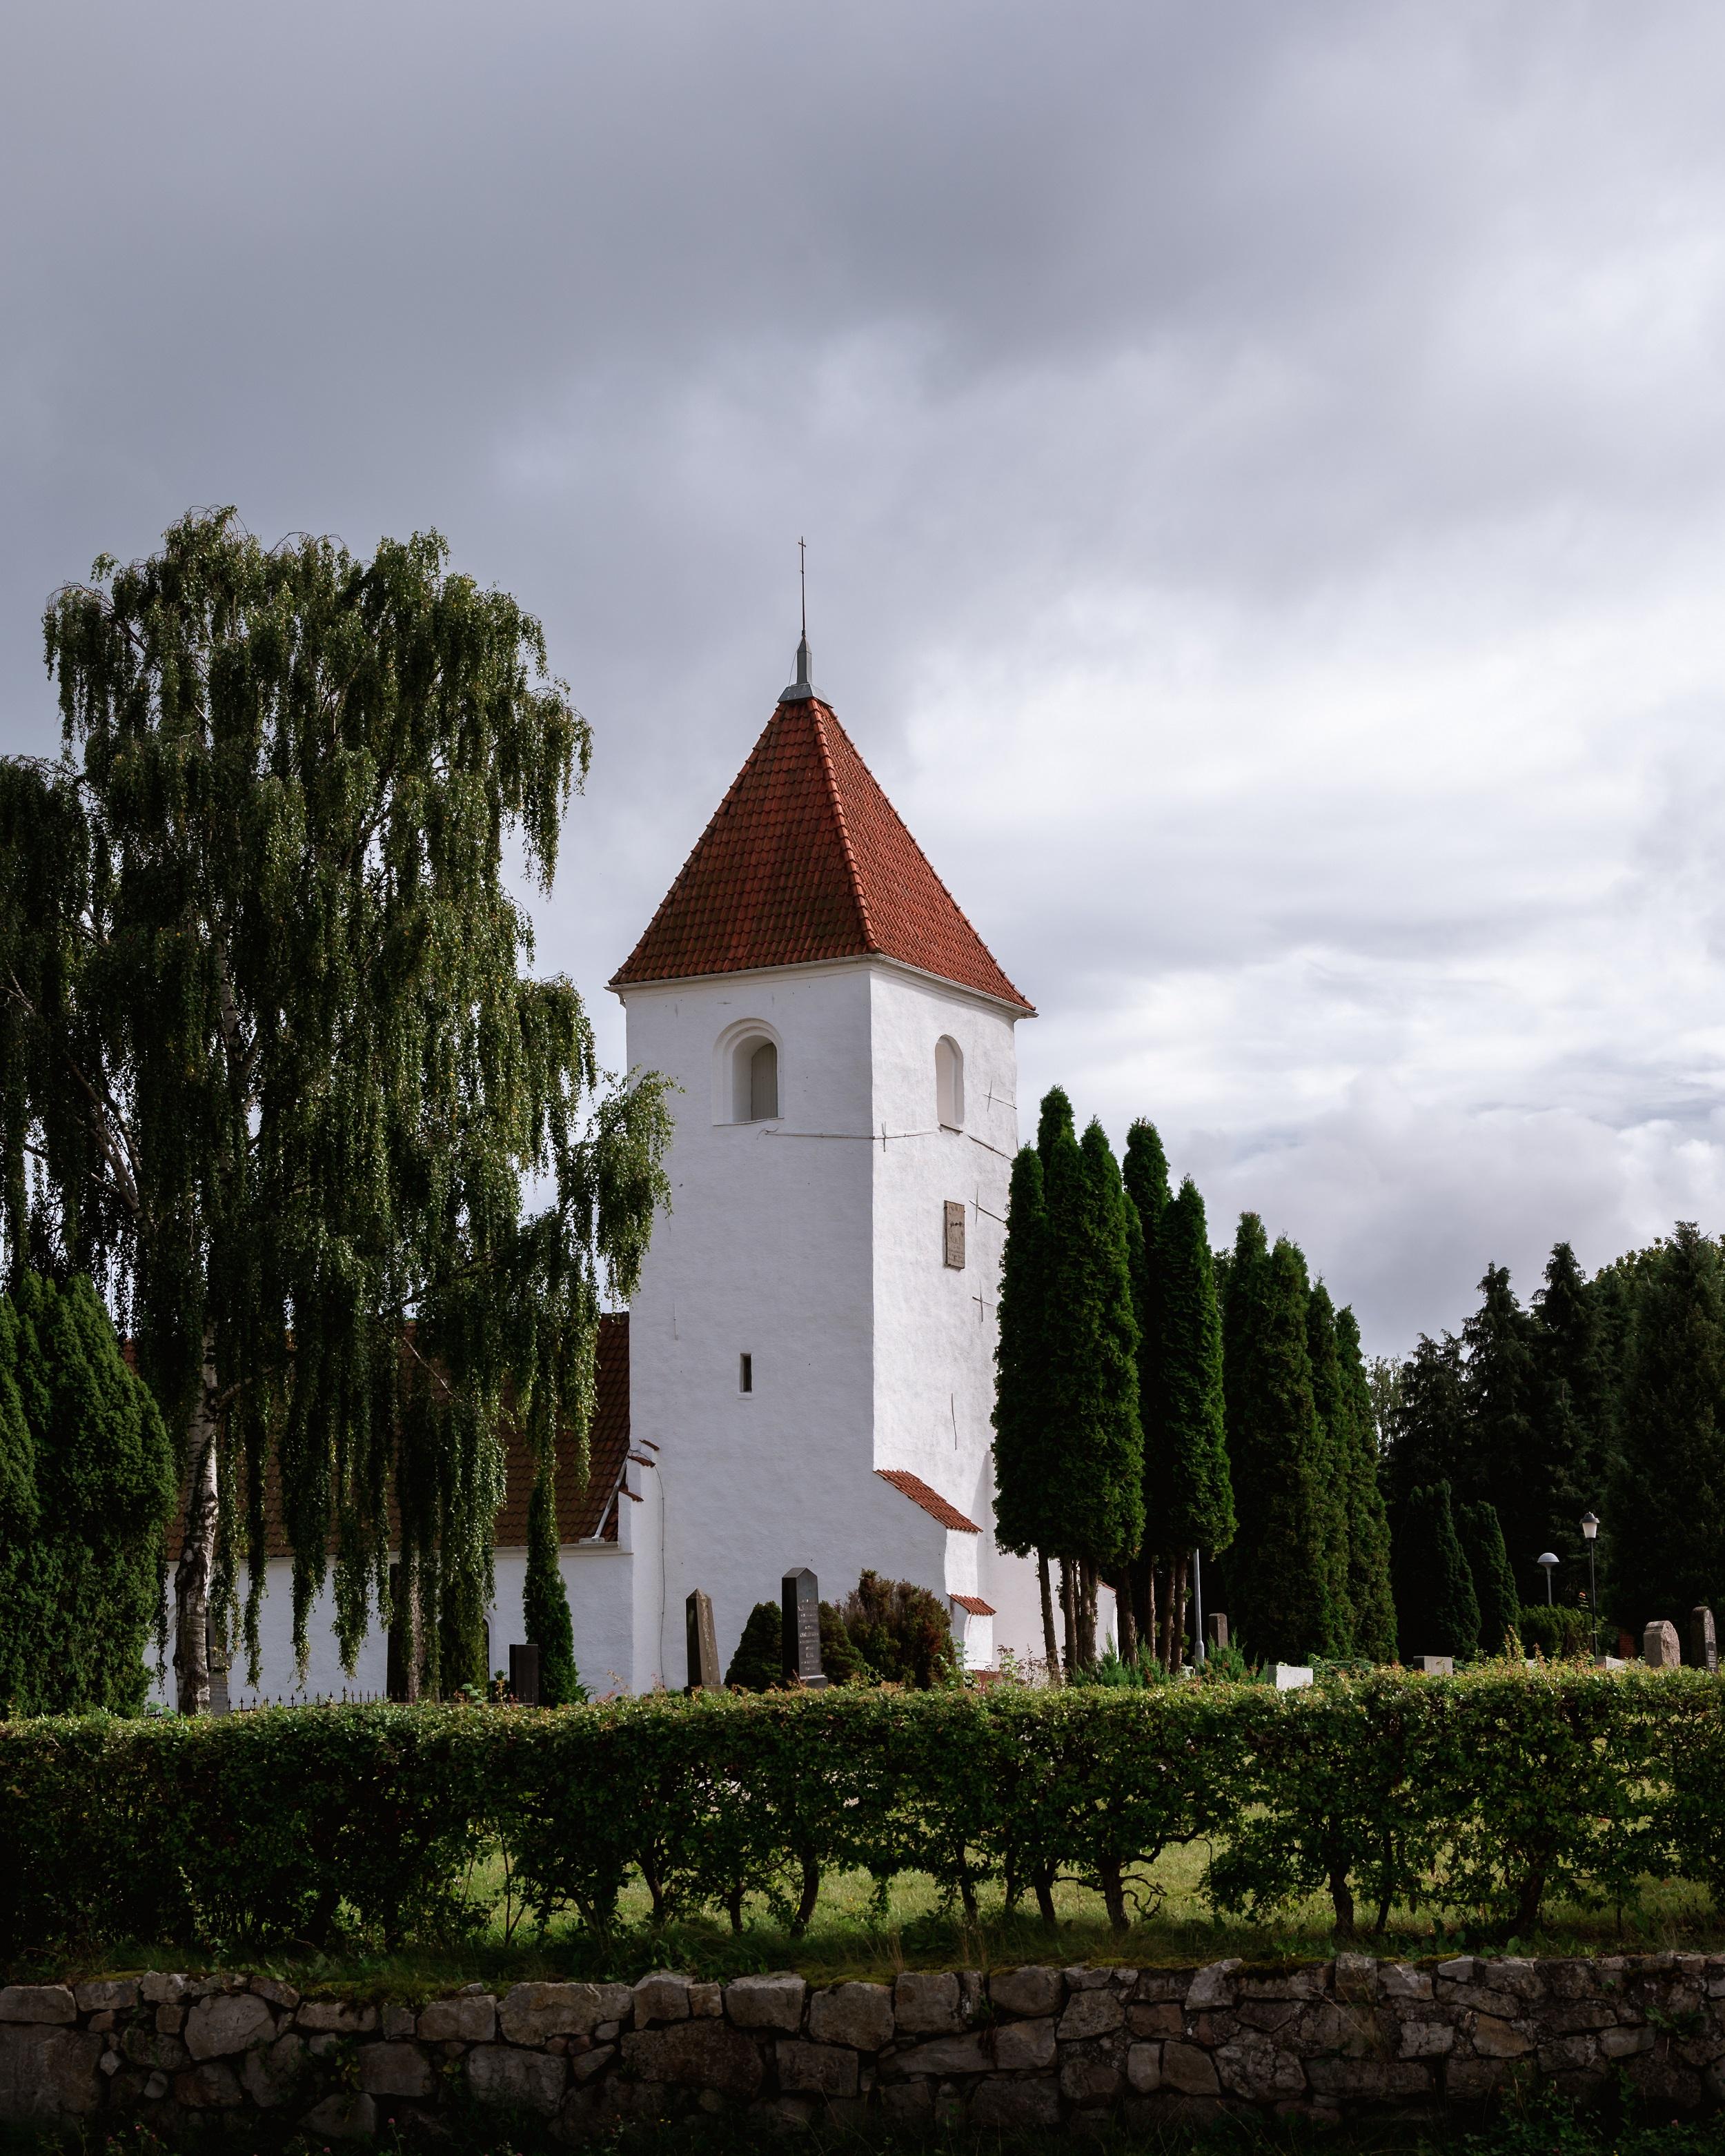 Torna-Hällestad Kirche